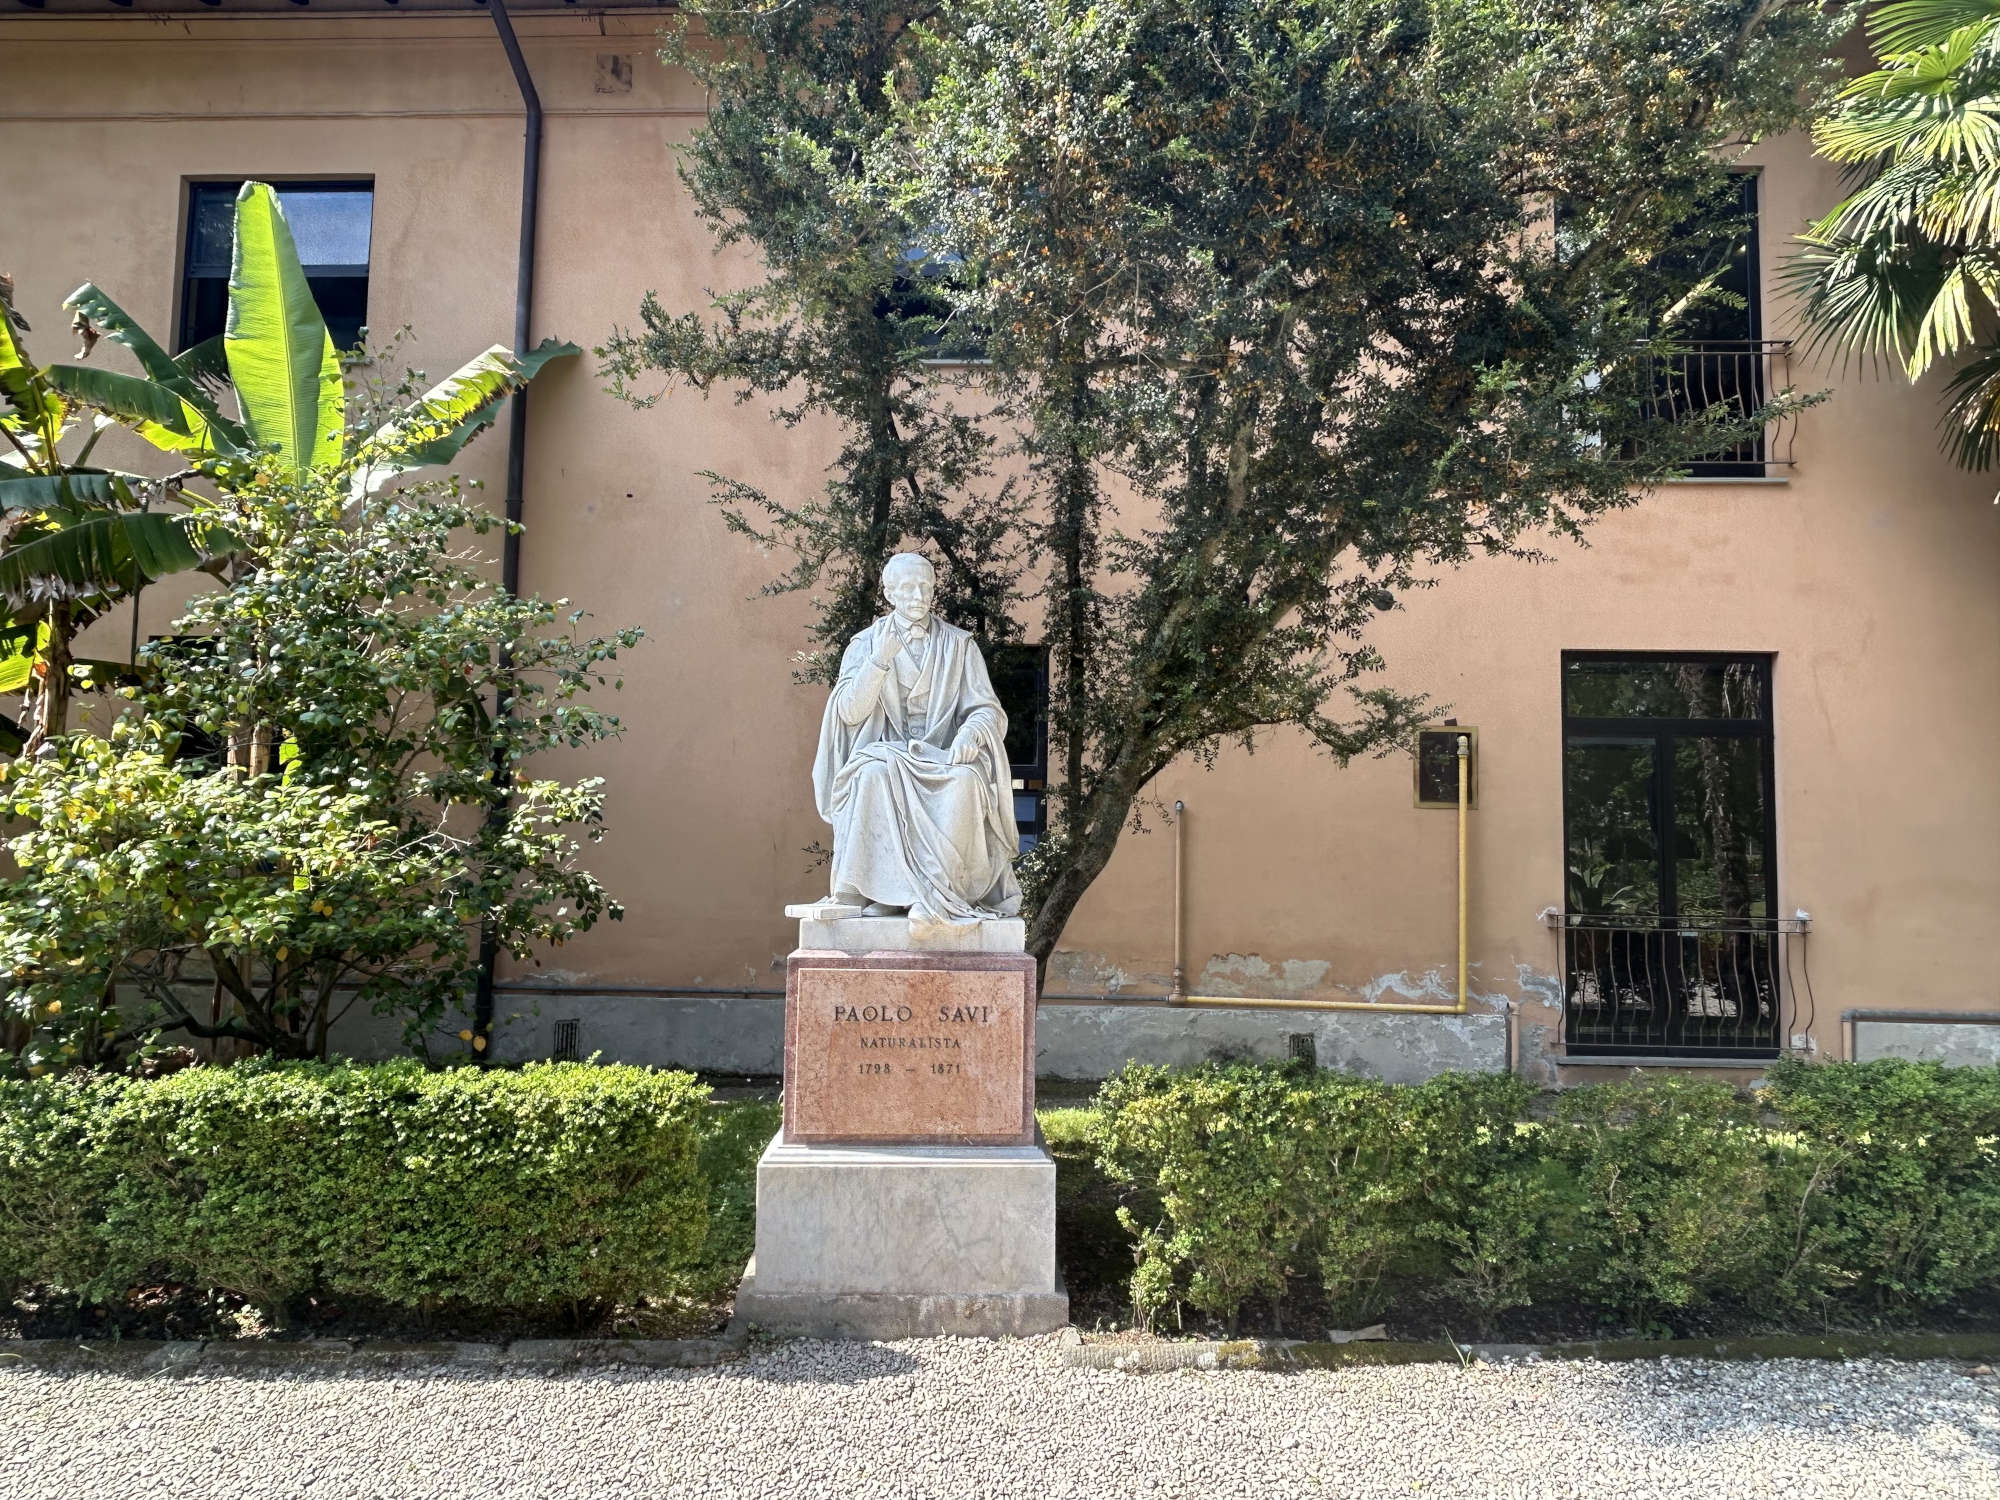 The Botanical Garden of Pisa